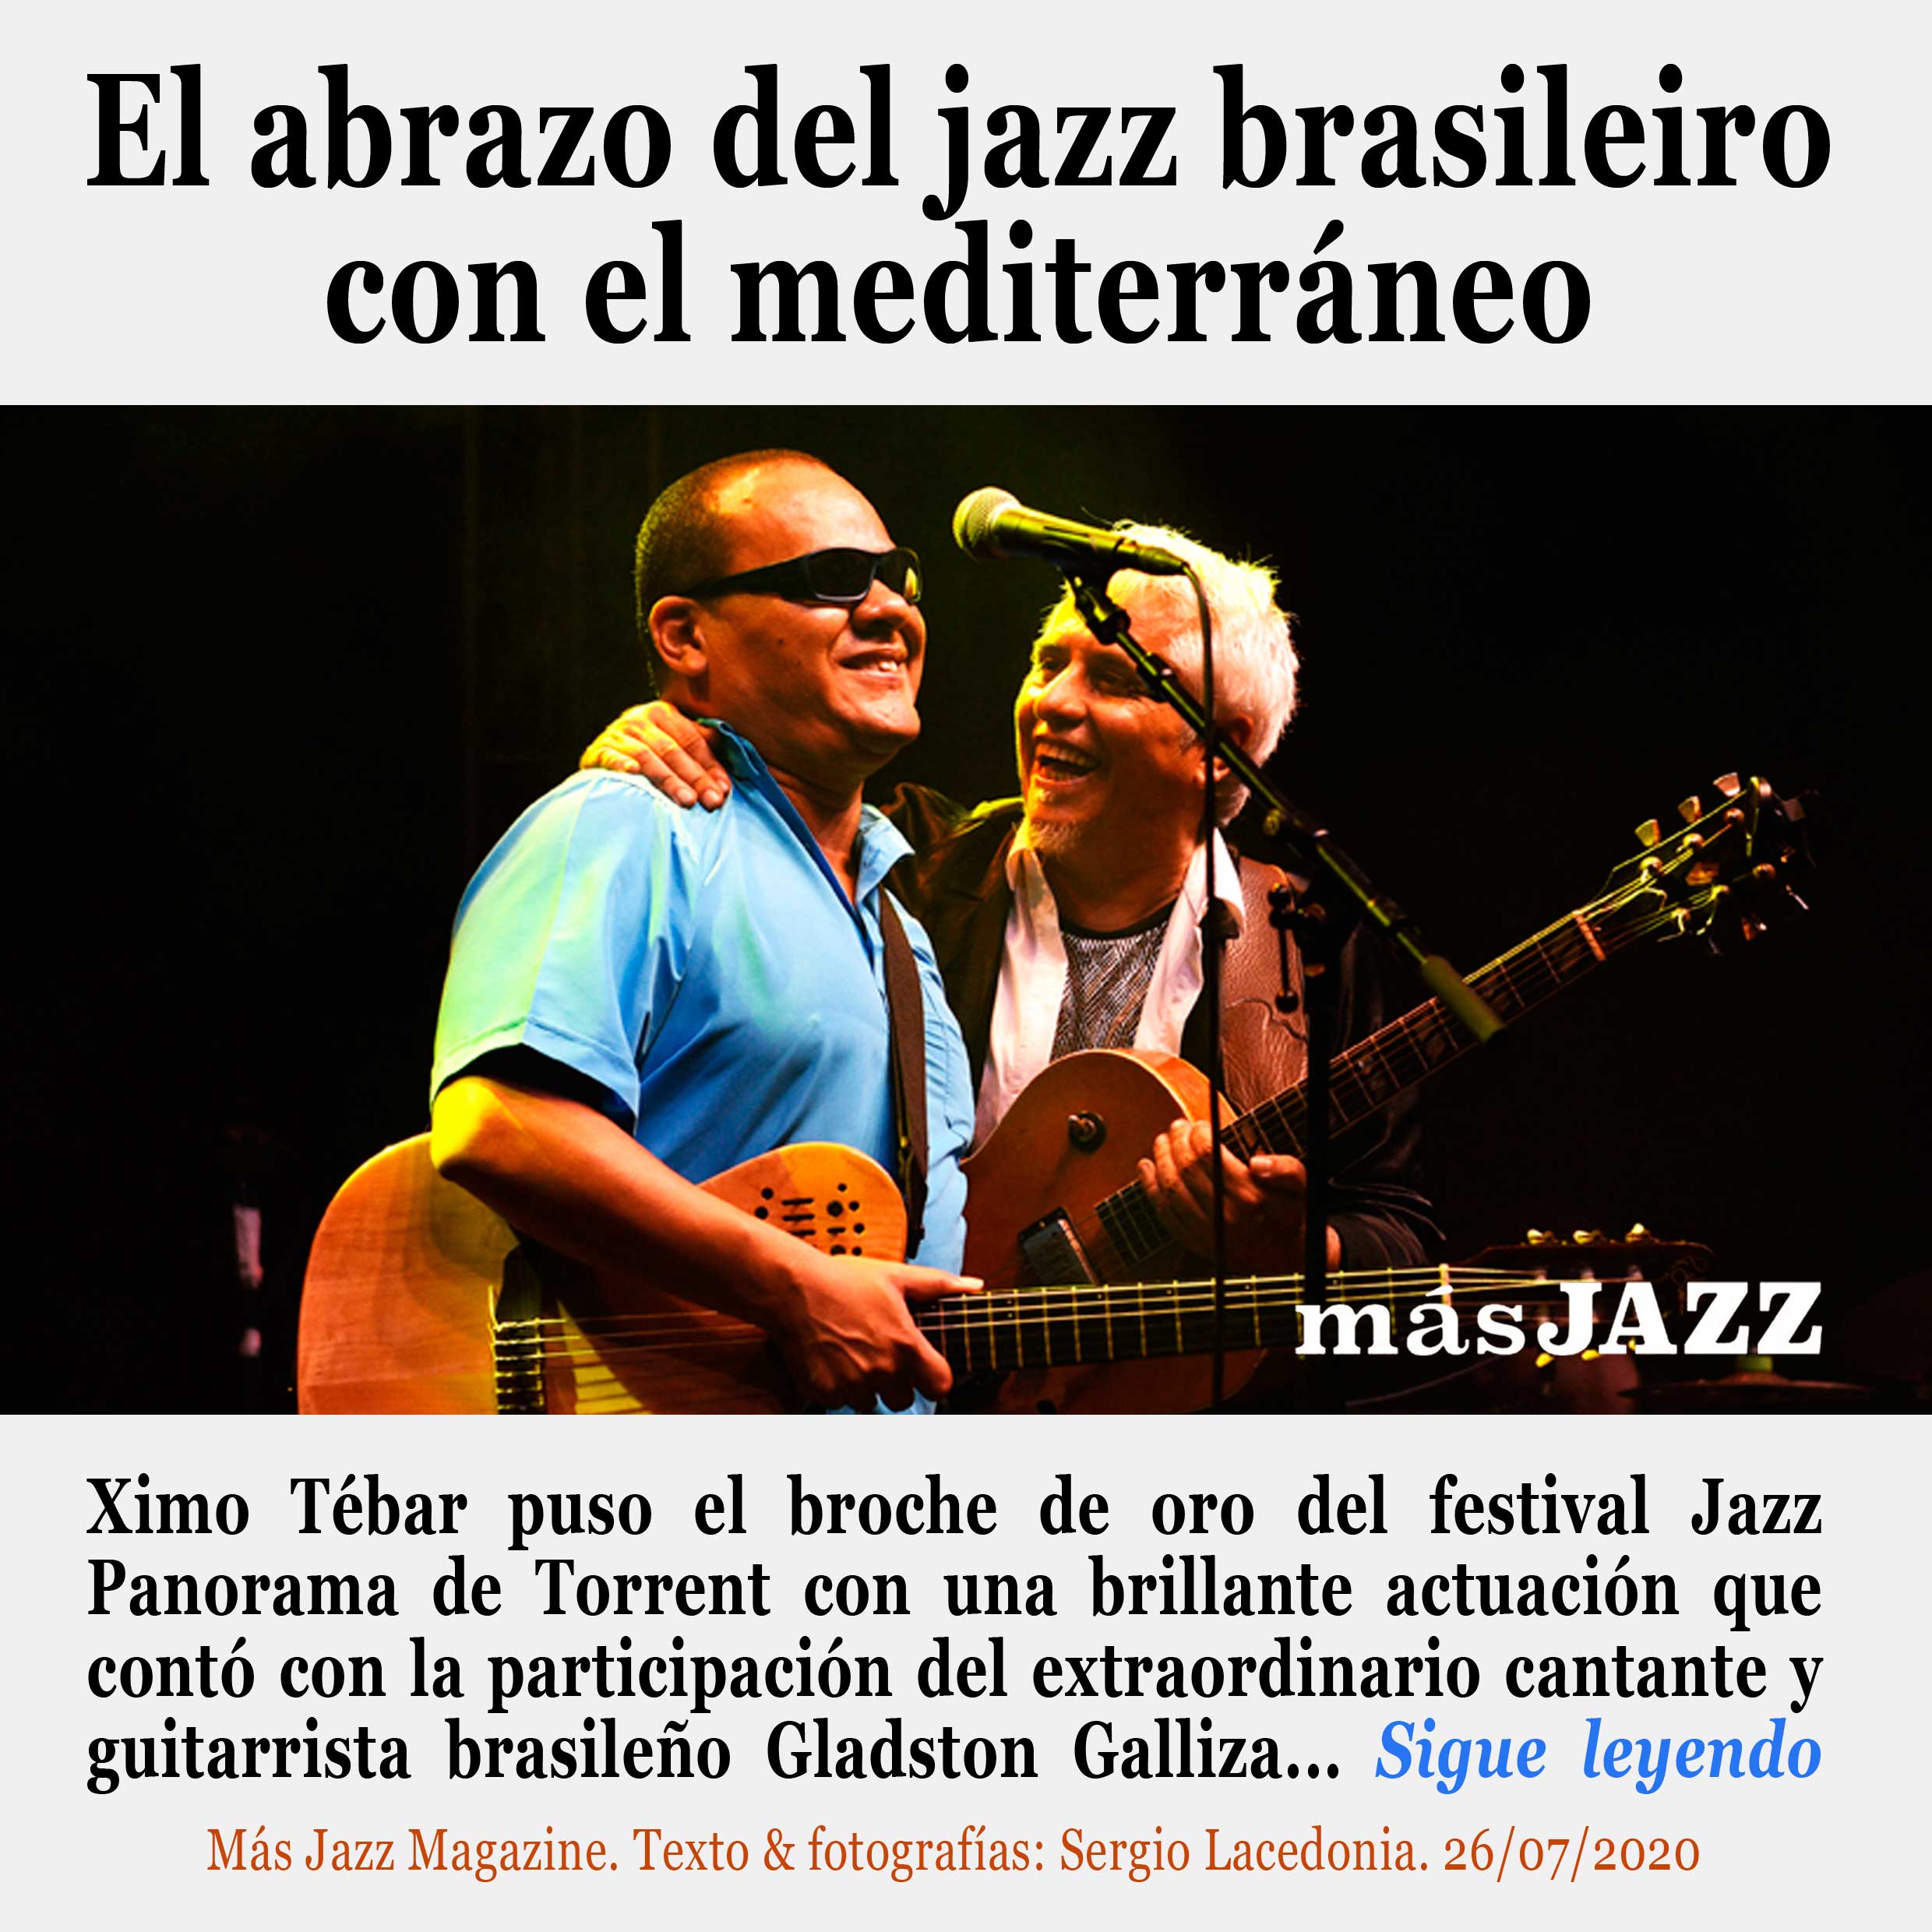 Ximo-Tebar-Gladston-Galliza-Brazilian-Jazz-Project-El-abrazo-del-jazz-brasileiro-con-el-mediterráneo-mas-jazz-magazine-jazz-panorama-Torrent-Julio-2020